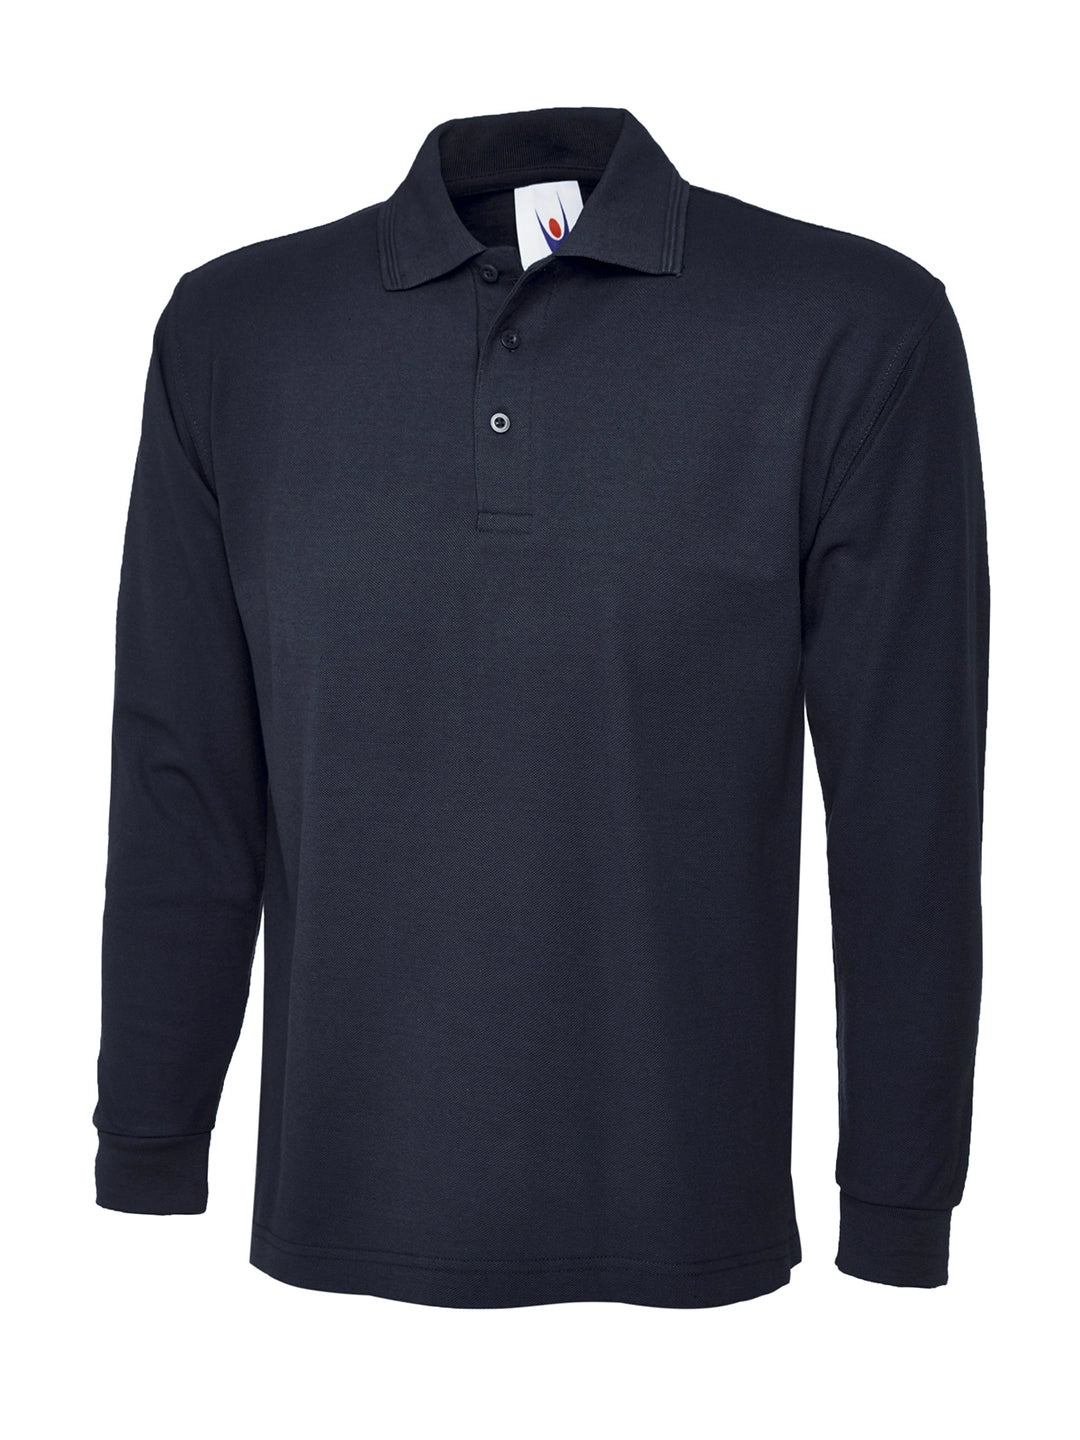 Uneek Clothing UC113 Long Sleeve Polo Shirt - COOZO